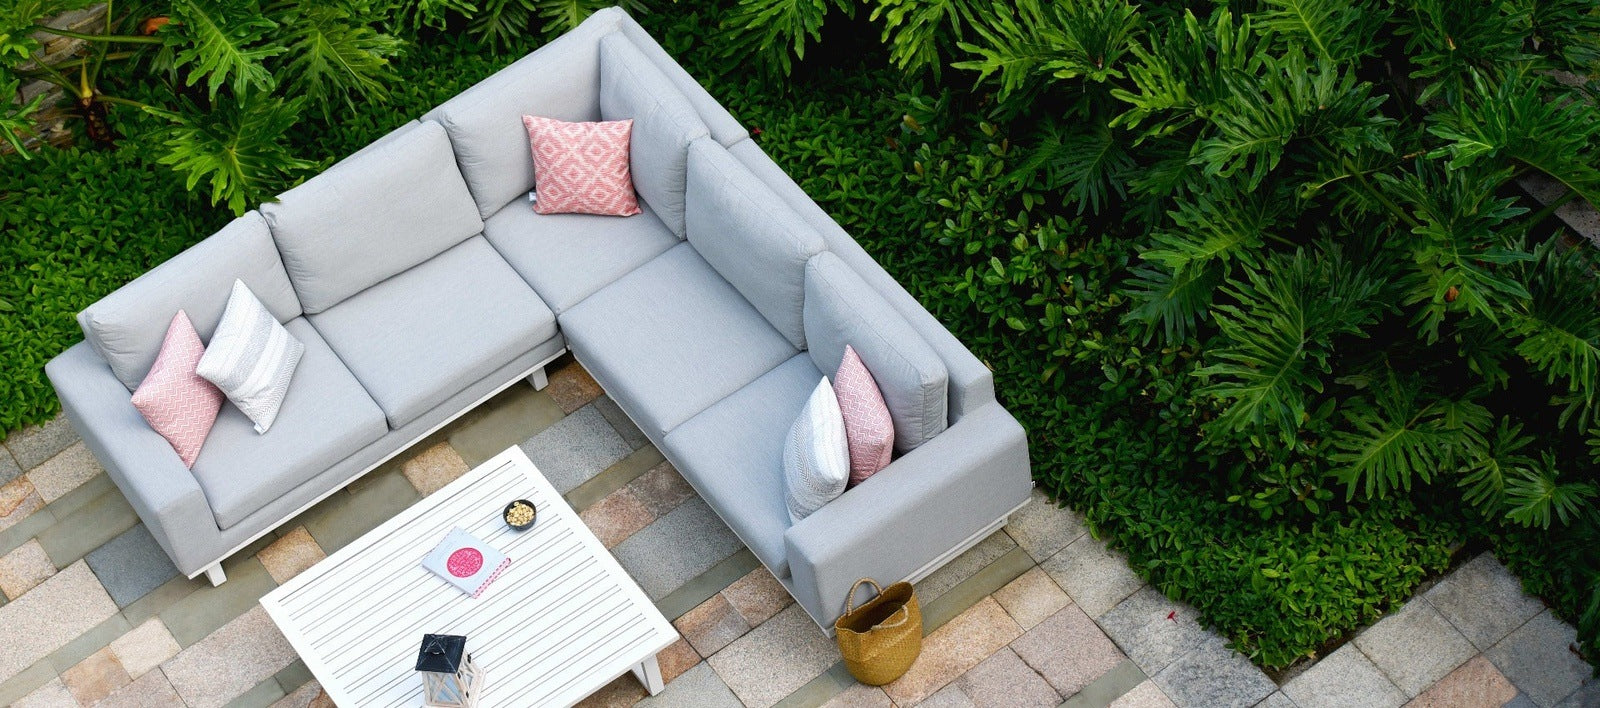 Maze Rattan Ethos Corner Group Lead Chine Outdoor Furniture Set